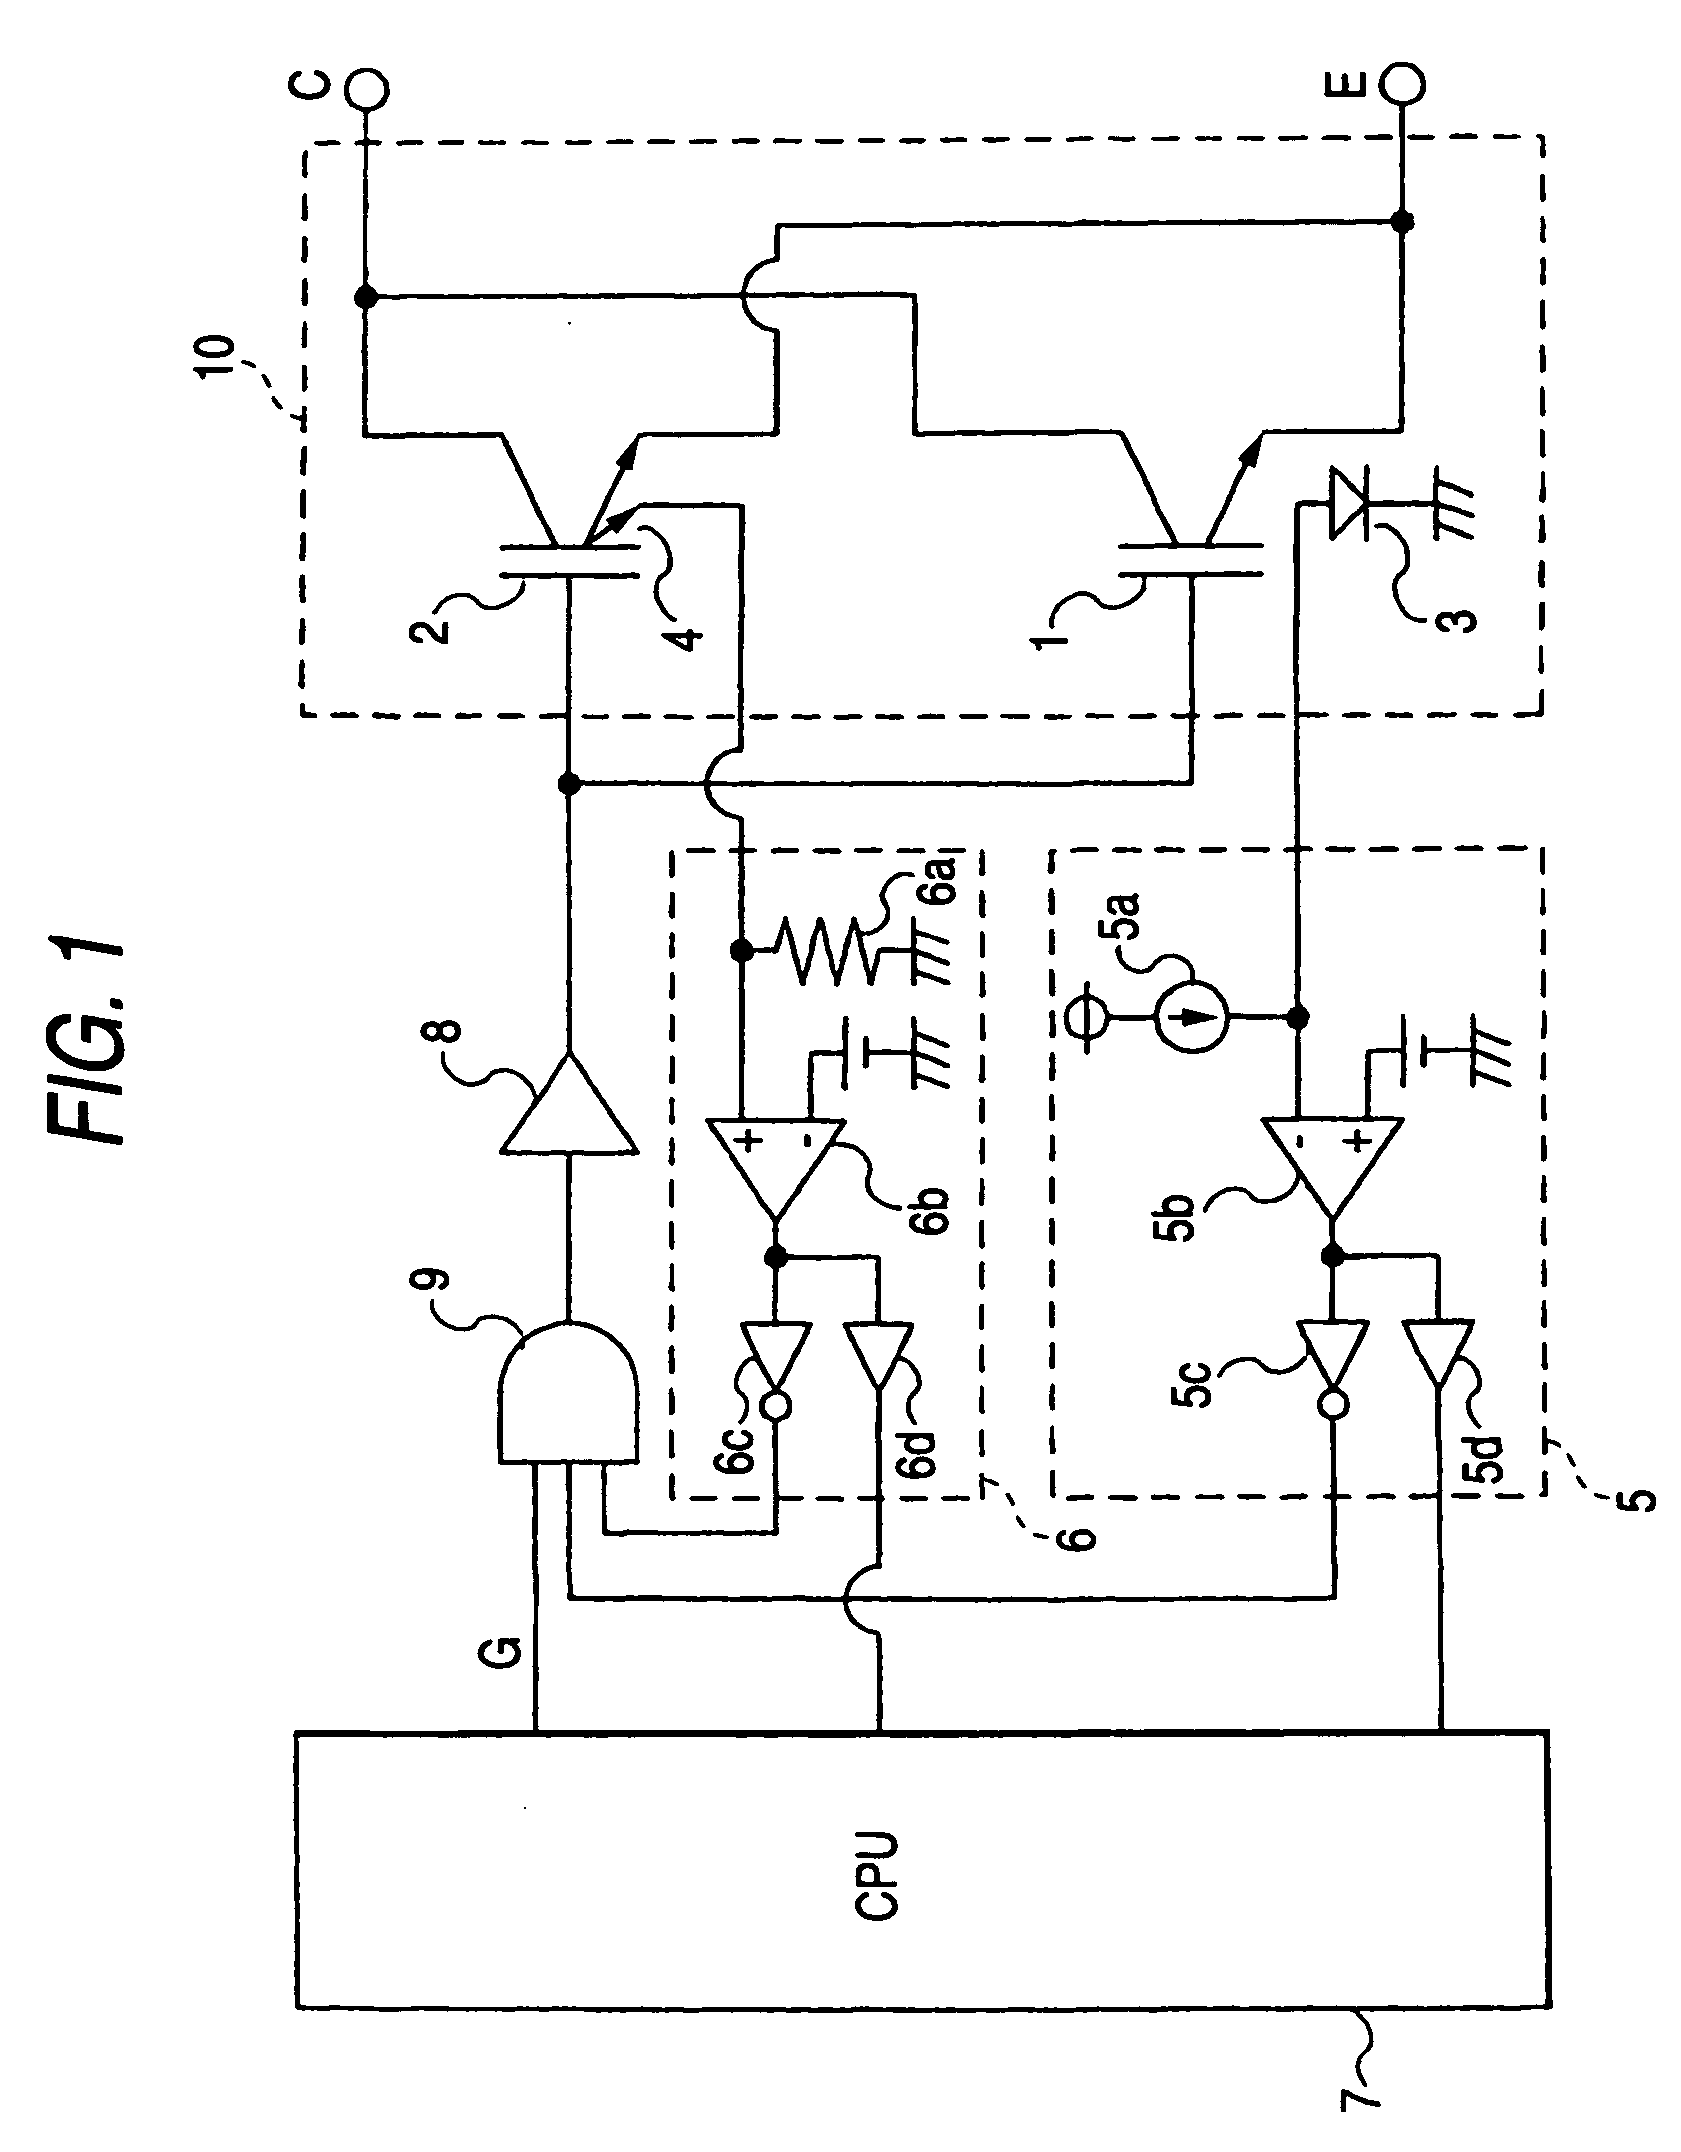 Semiconductor power converter apparatus